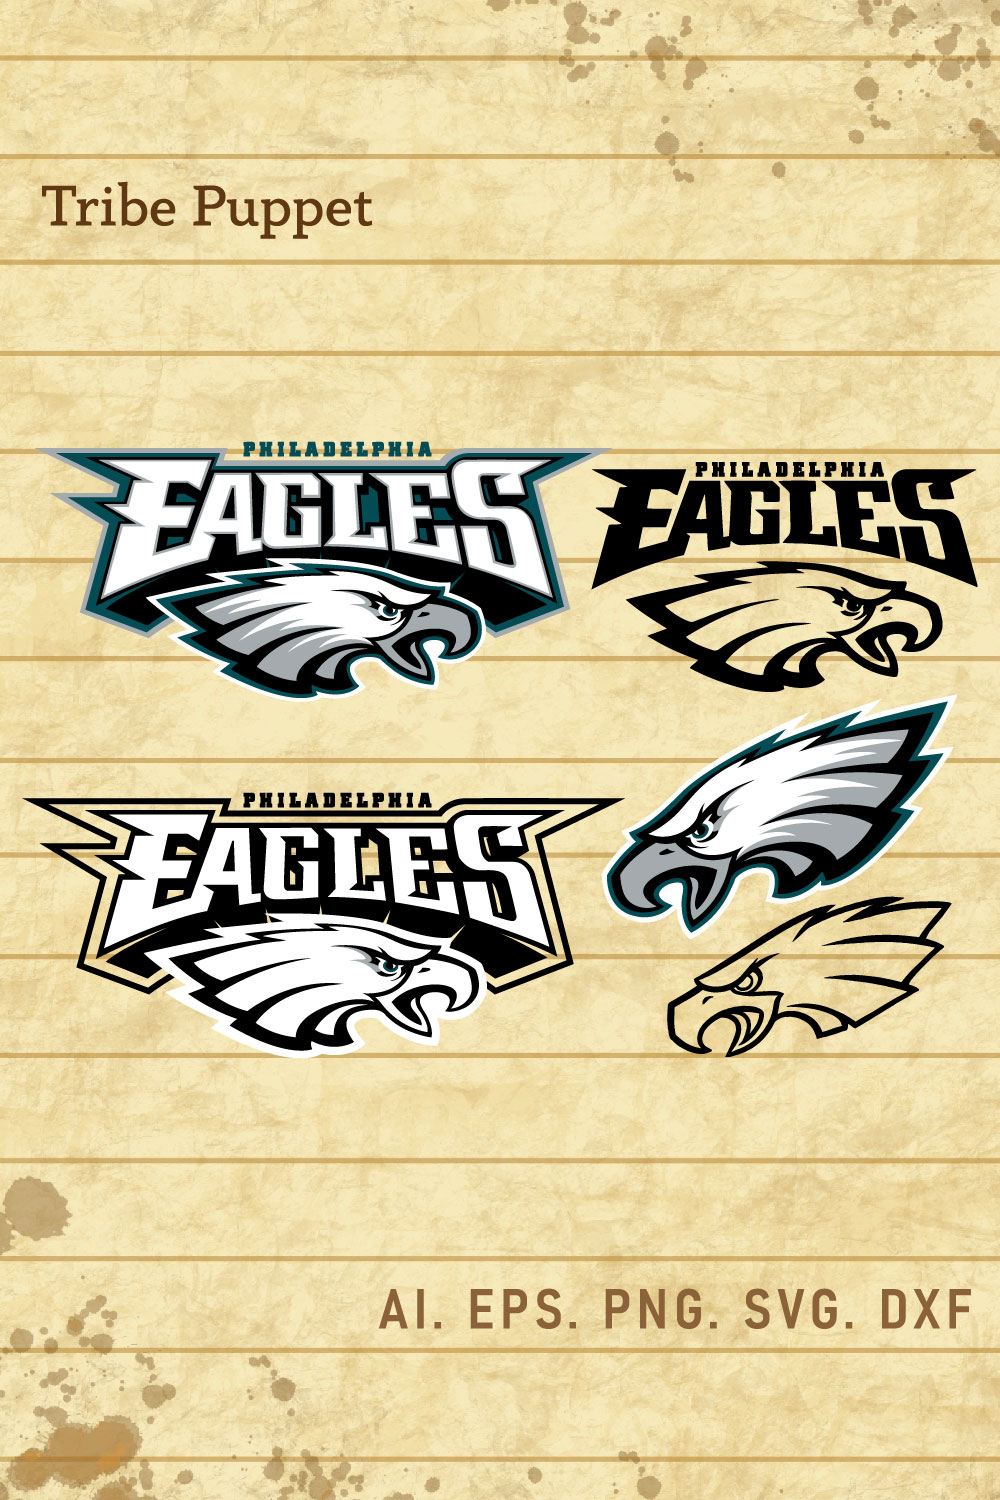 Philadelphia Eagles Vector sets pinterest preview image.